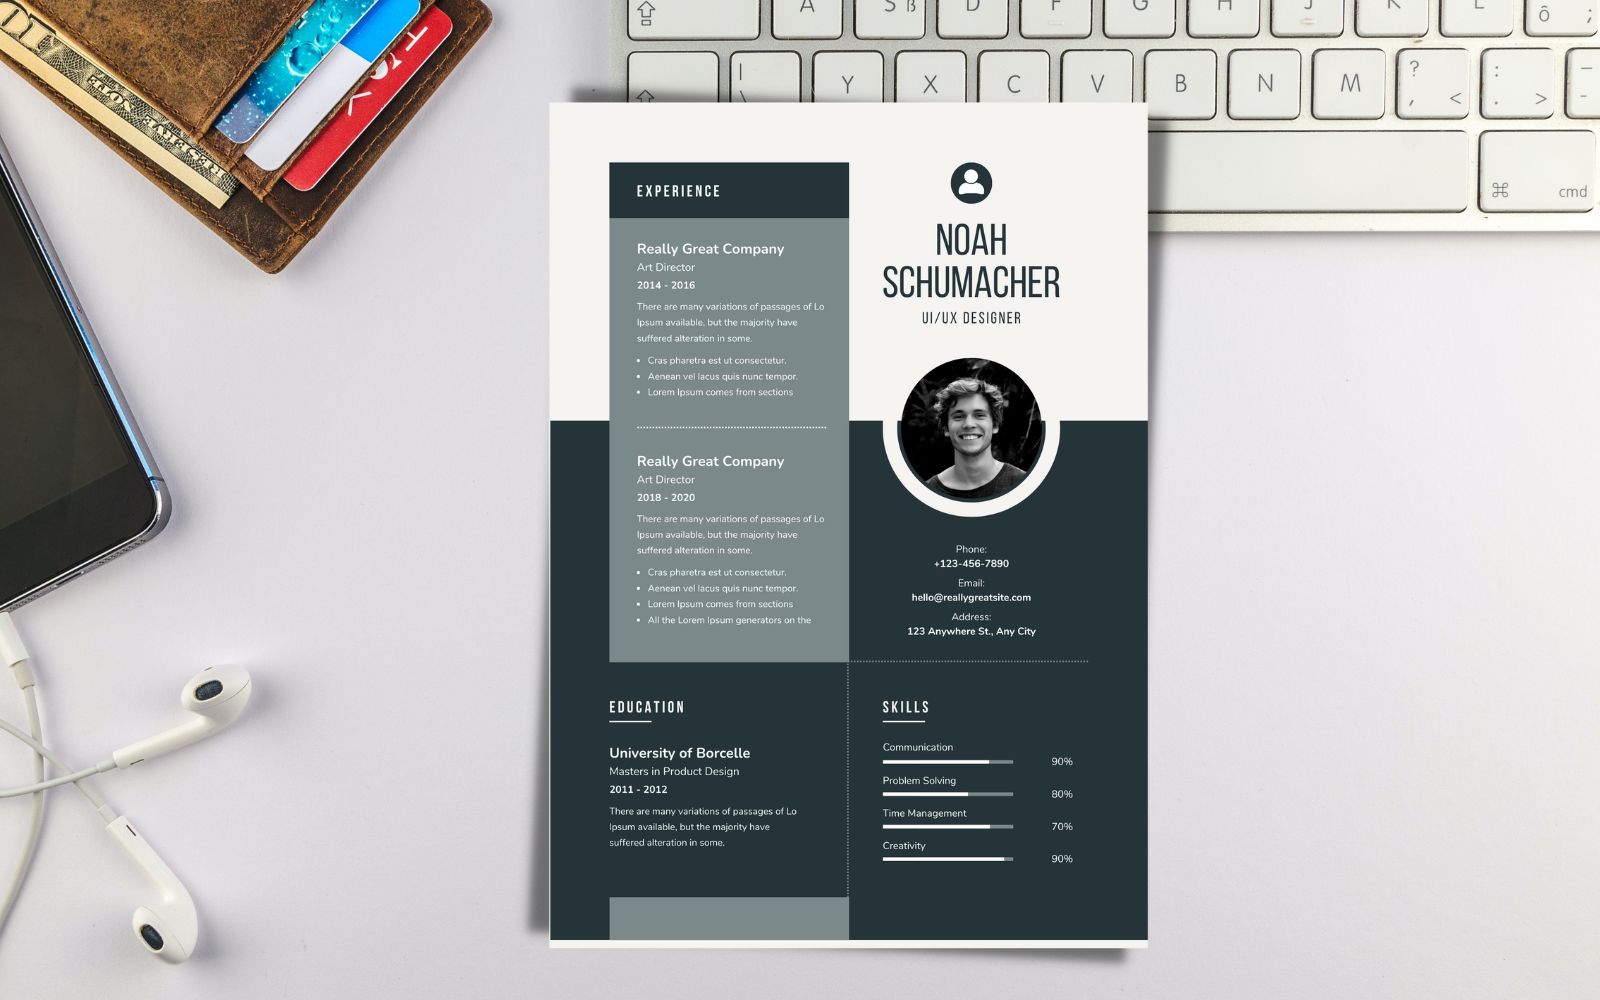 Noah Schumacher - Simple Resume Design For UI/UX Designer